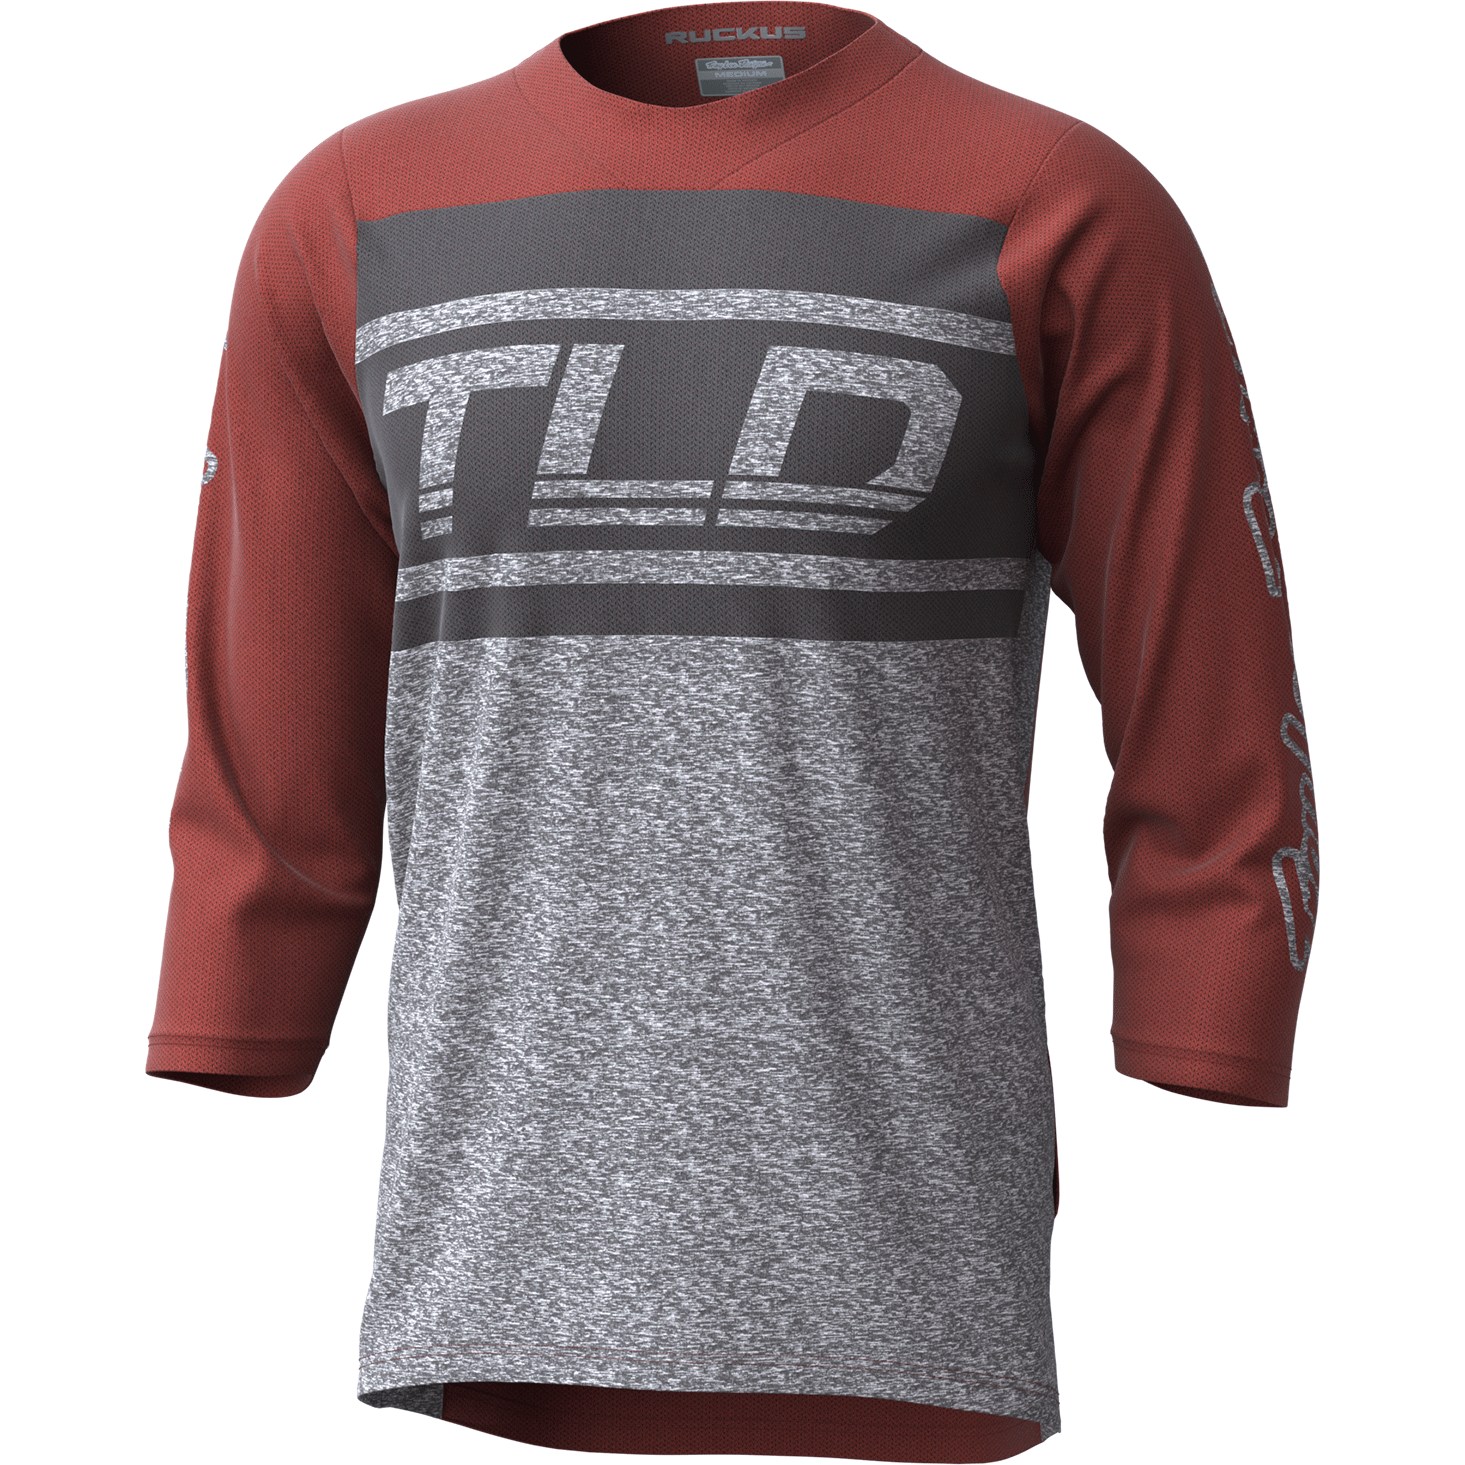 Foto van Troy Lee Designs Ruckus Shirt met 3/4-Mouwen - bars red clay / gray heather